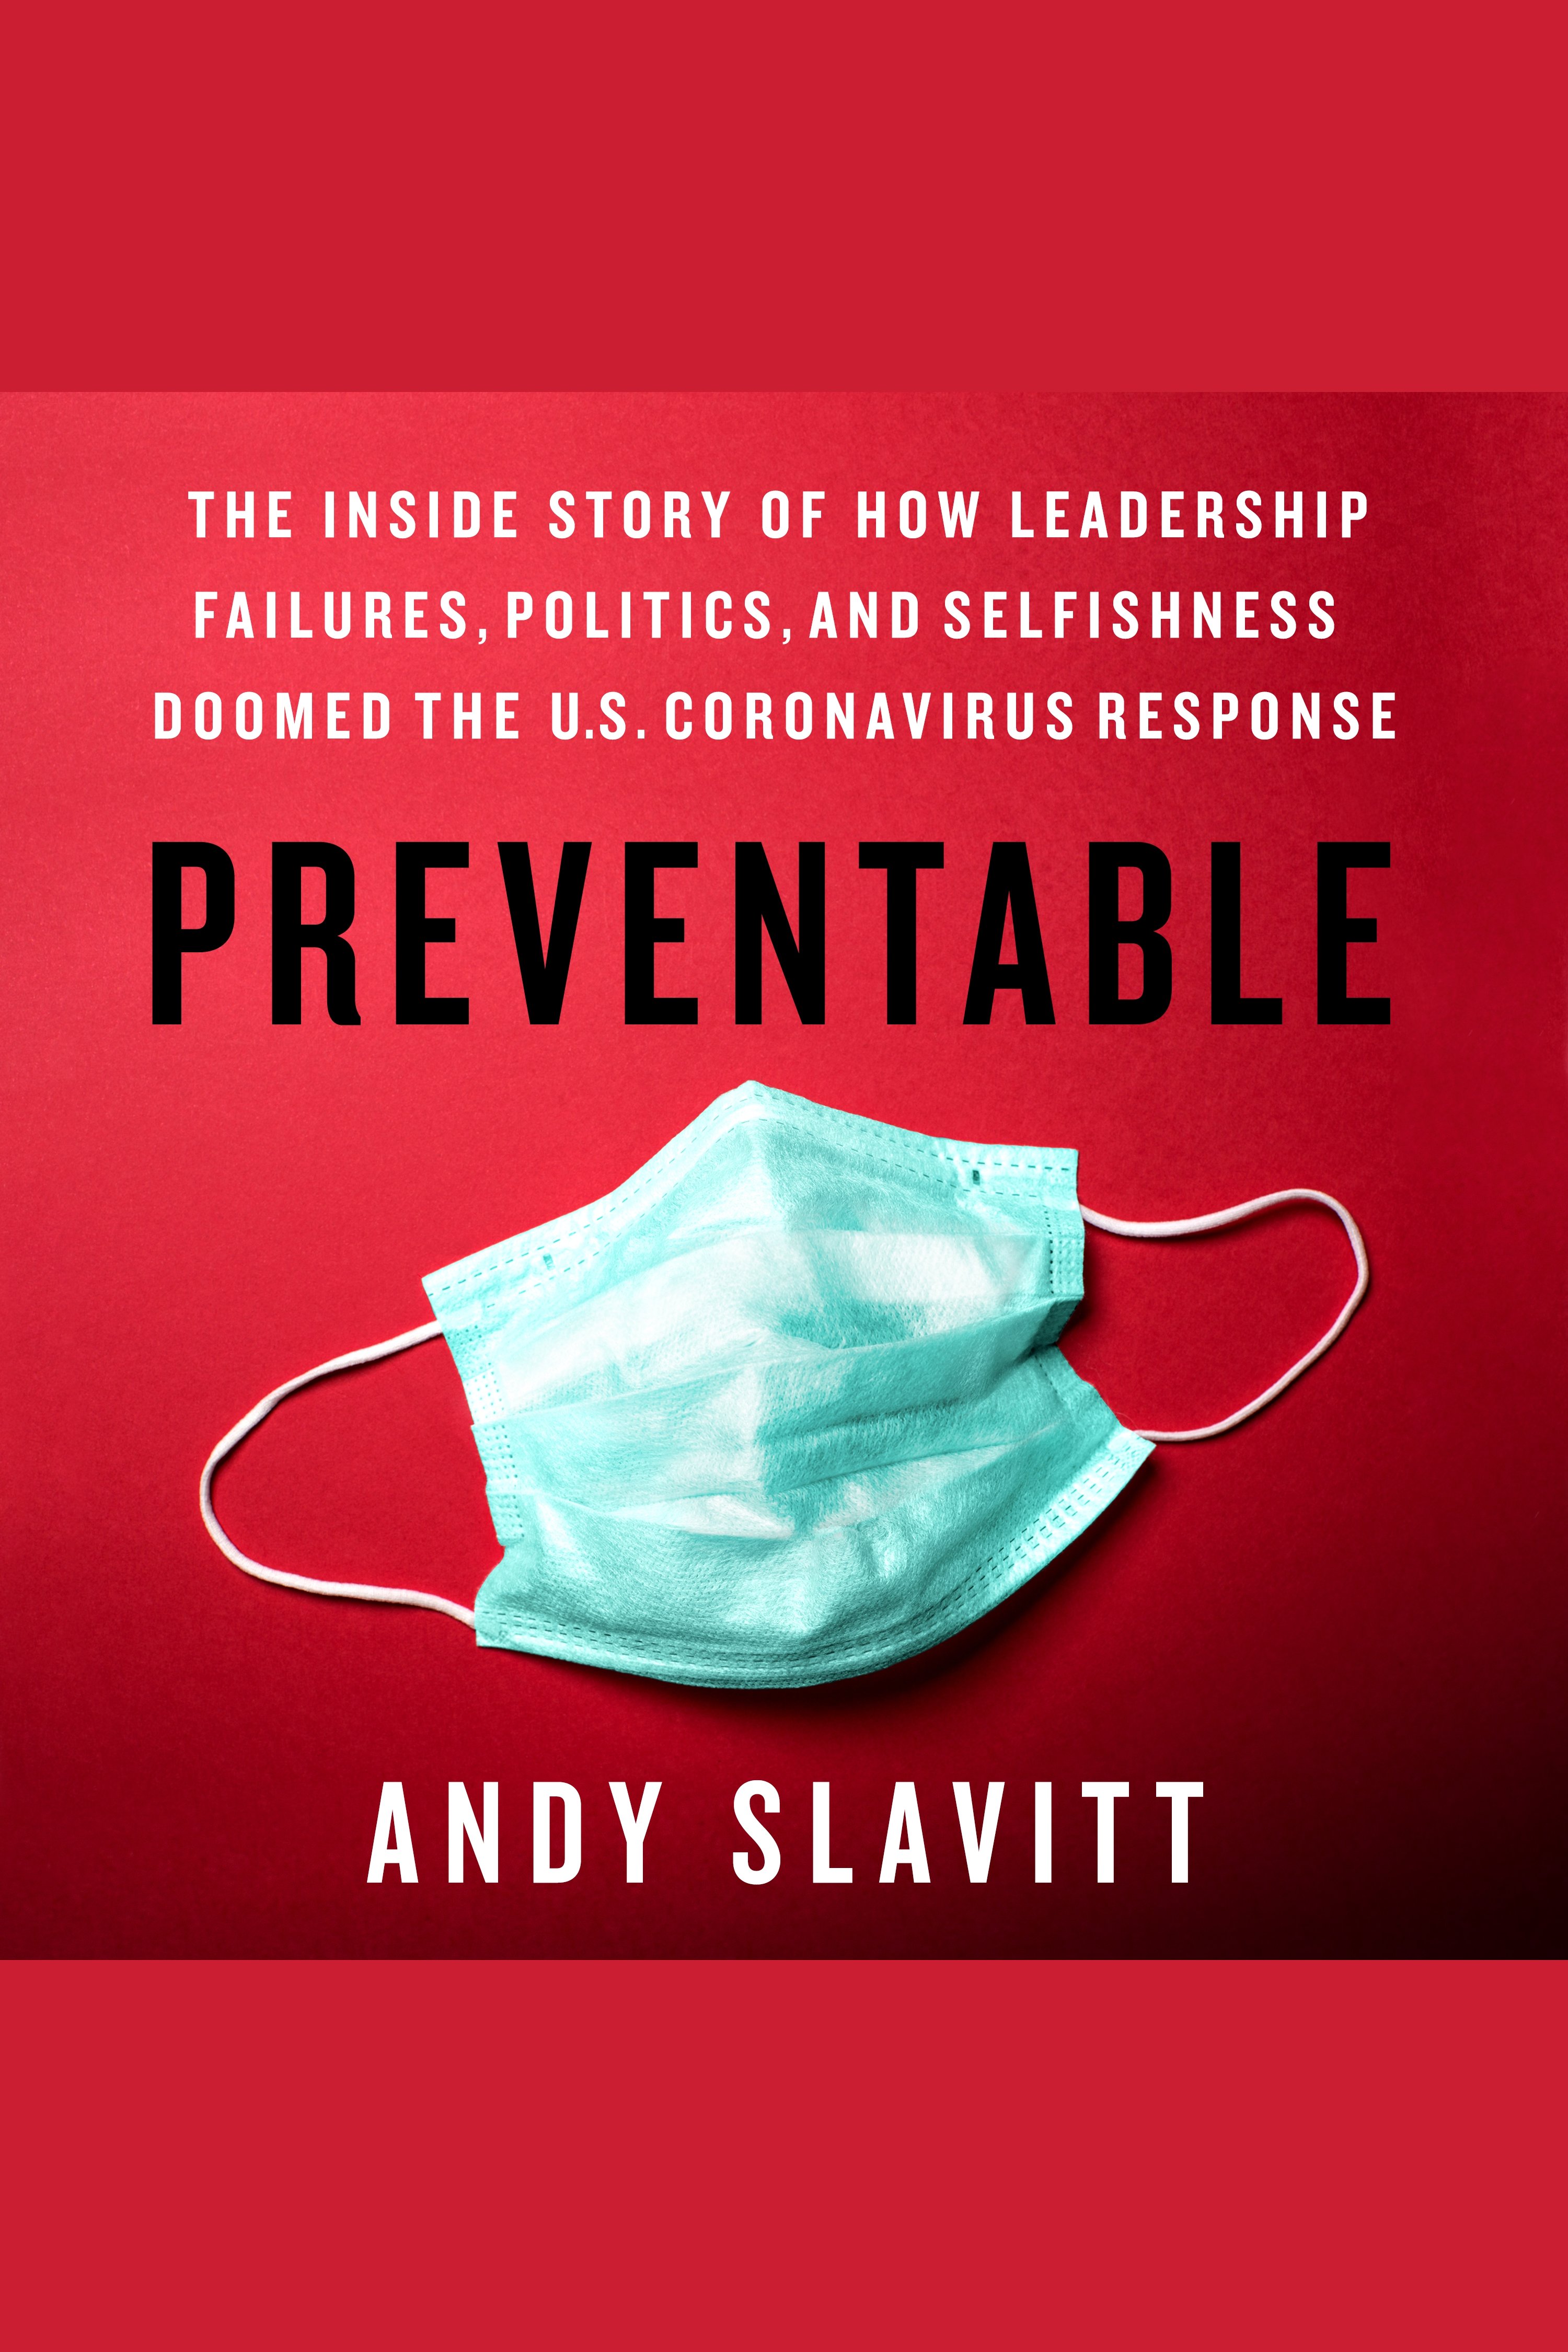 Preventable The Inside Story of How Leadership Failures, Politics, and Selfishness Doomed the U.S. Coronavirus Response cover image